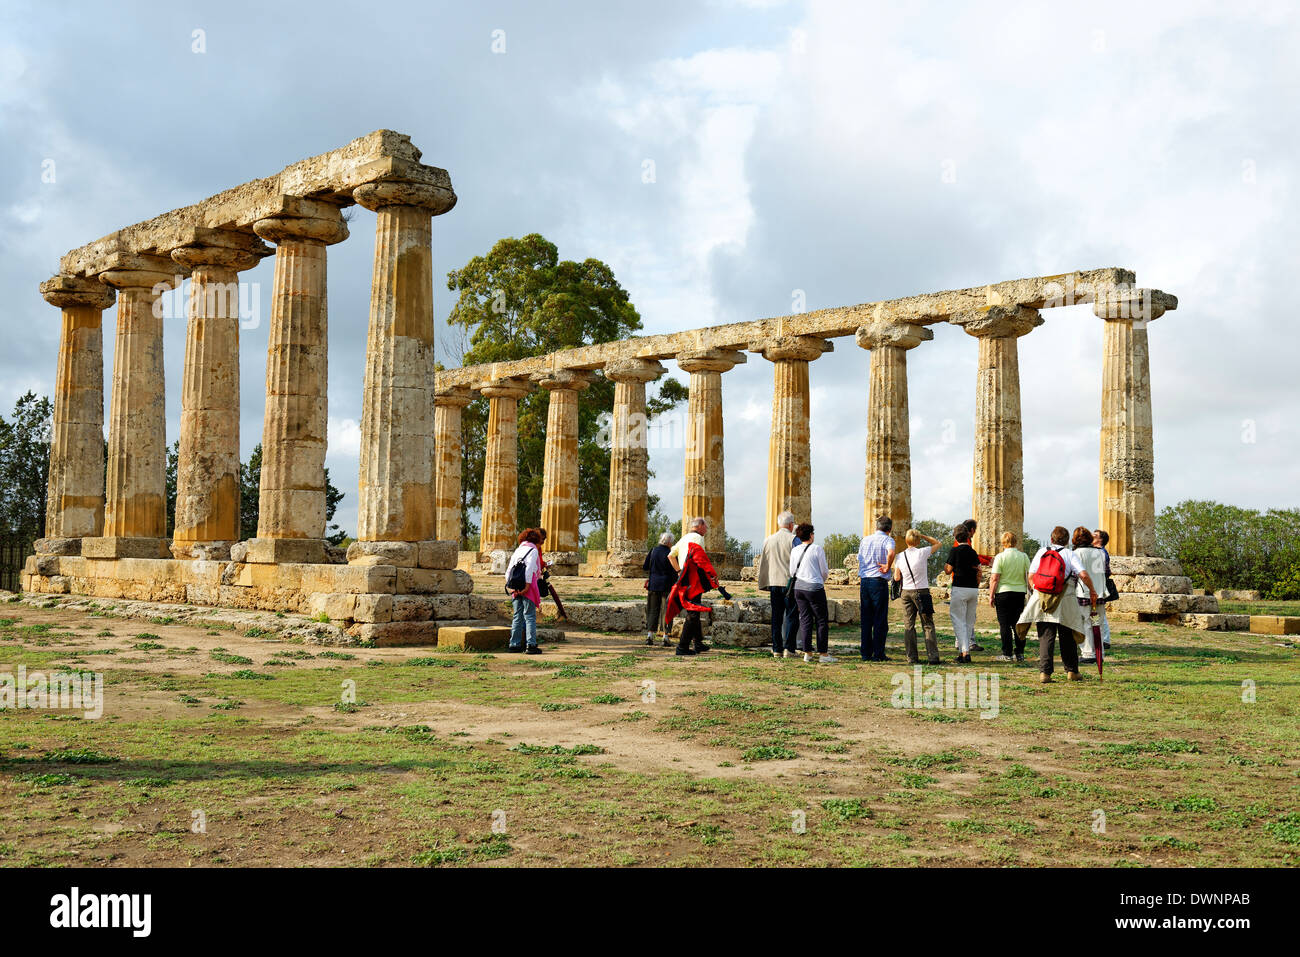 Tempio di Hera, antica città di Metaponto, Bernalda, regione Basilicata, Italia Foto Stock